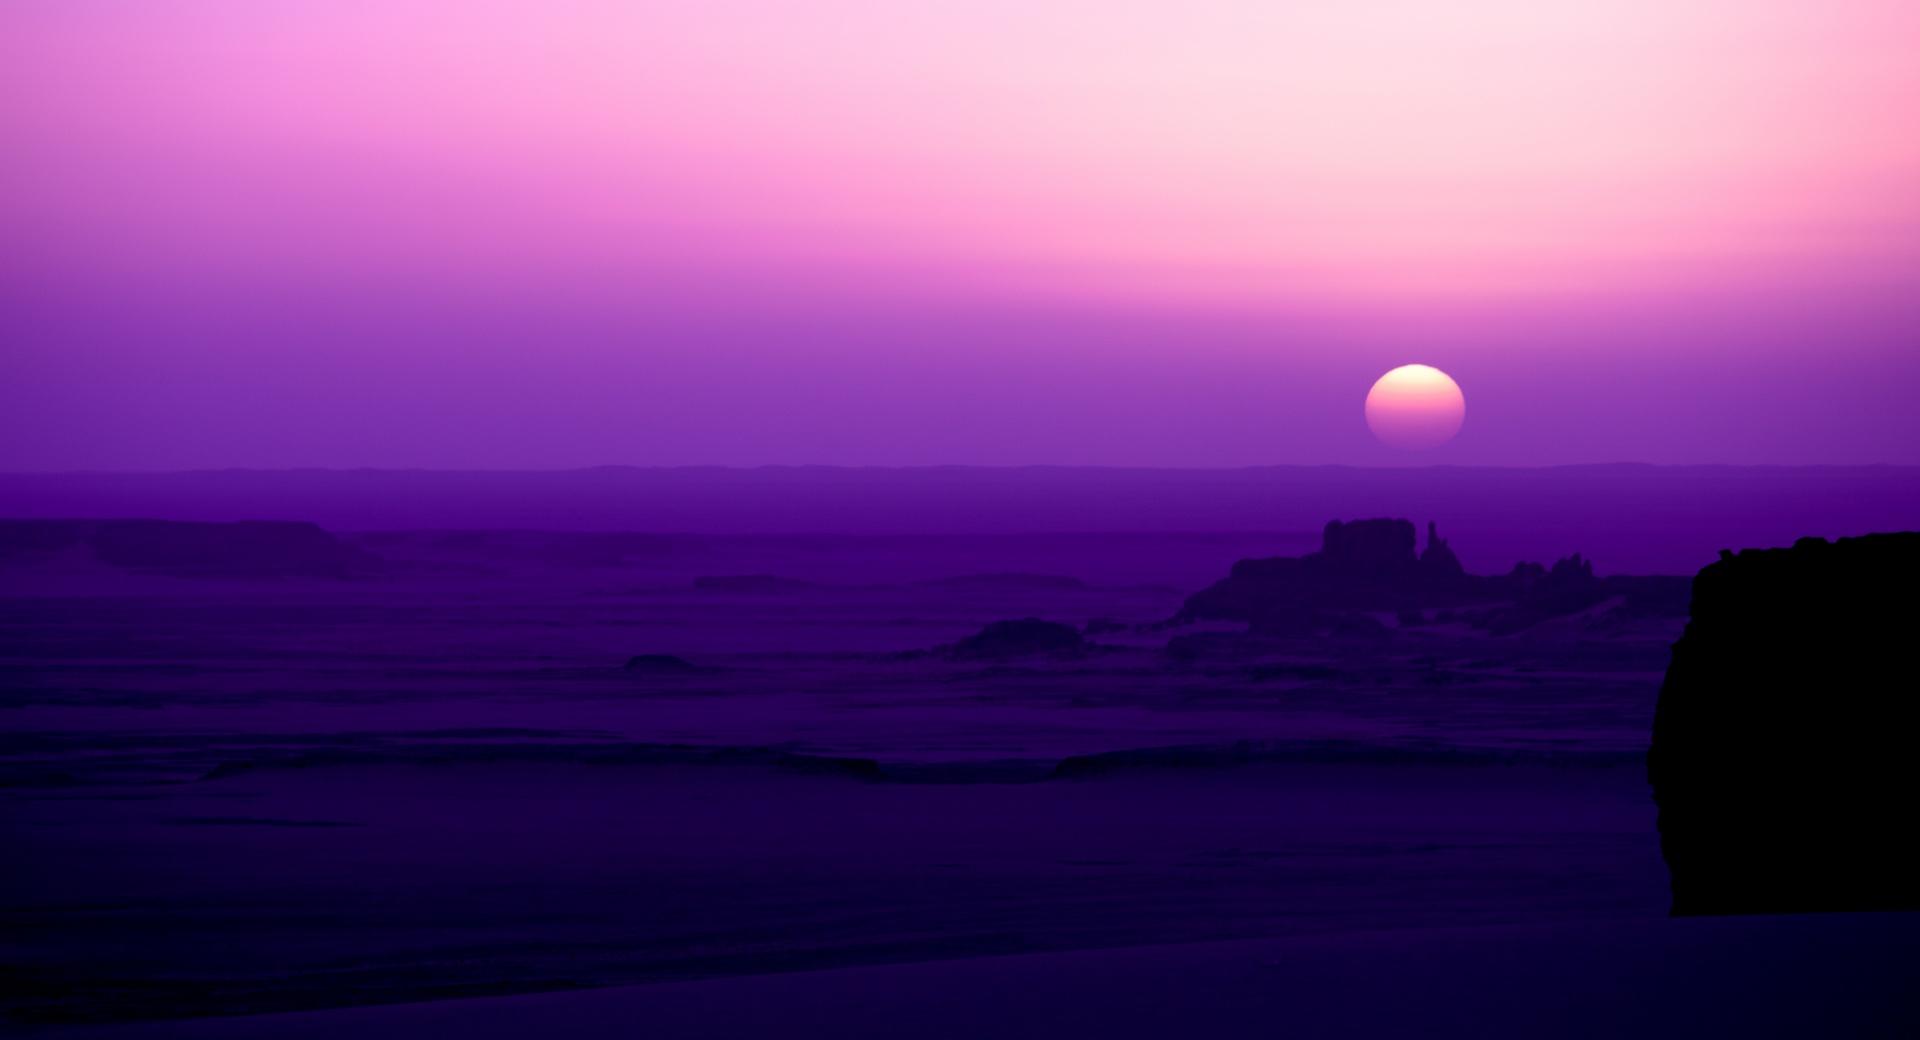 Purple Sunrise at 1024 x 1024 iPad size wallpapers HD quality